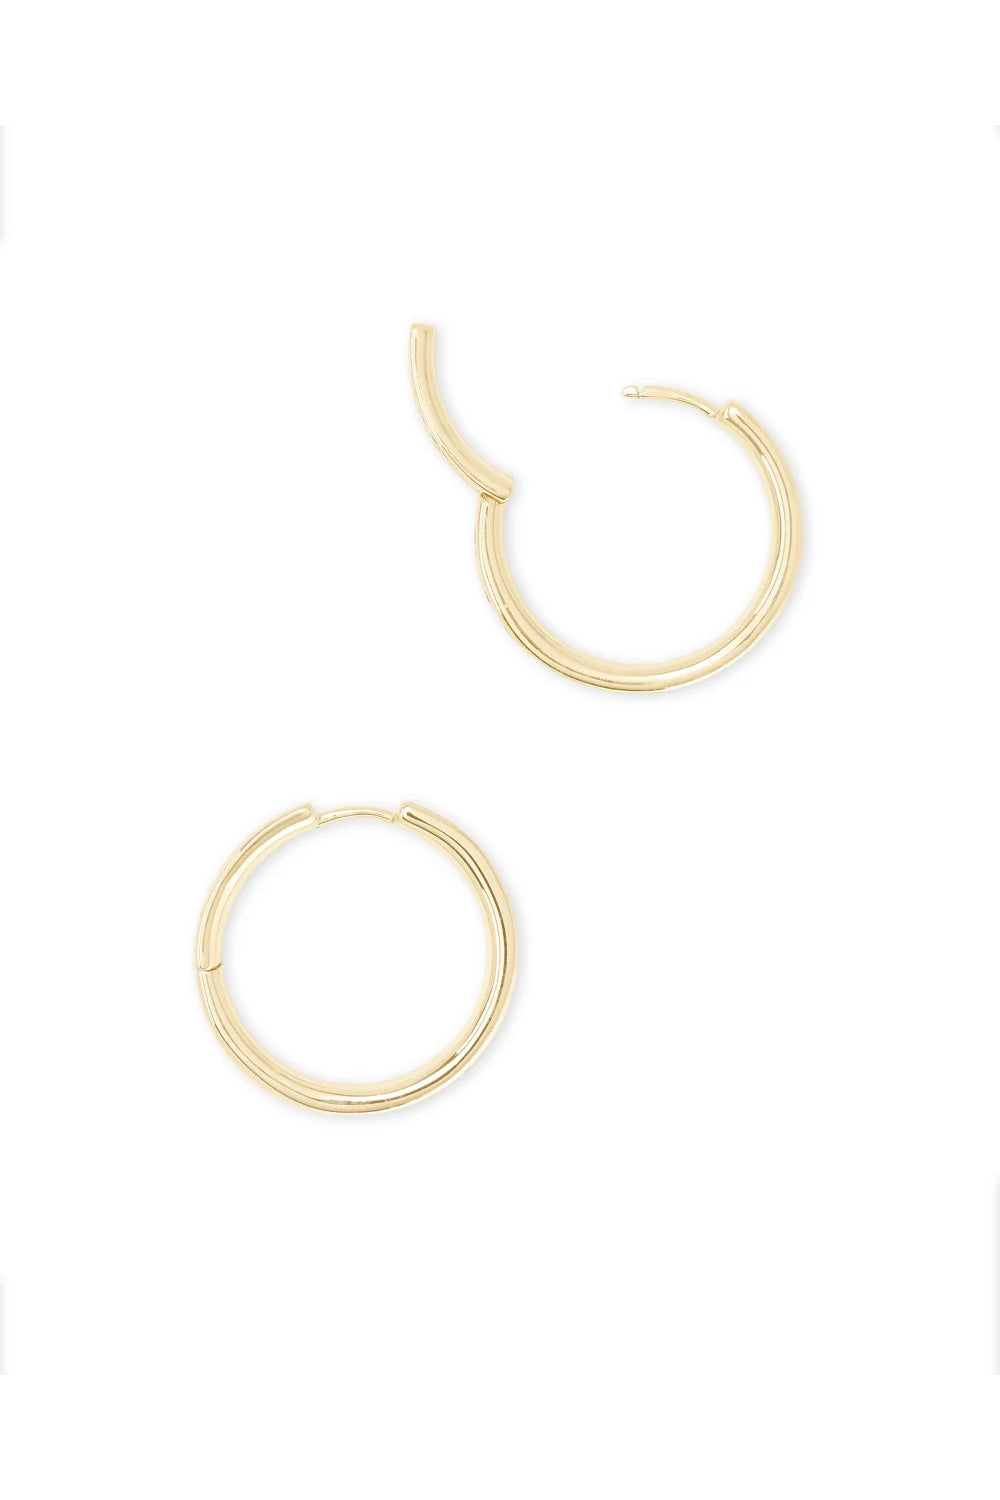 Kendra Scott: Jack Gold Hoop Earrings - White Crystal | Makk Fashions